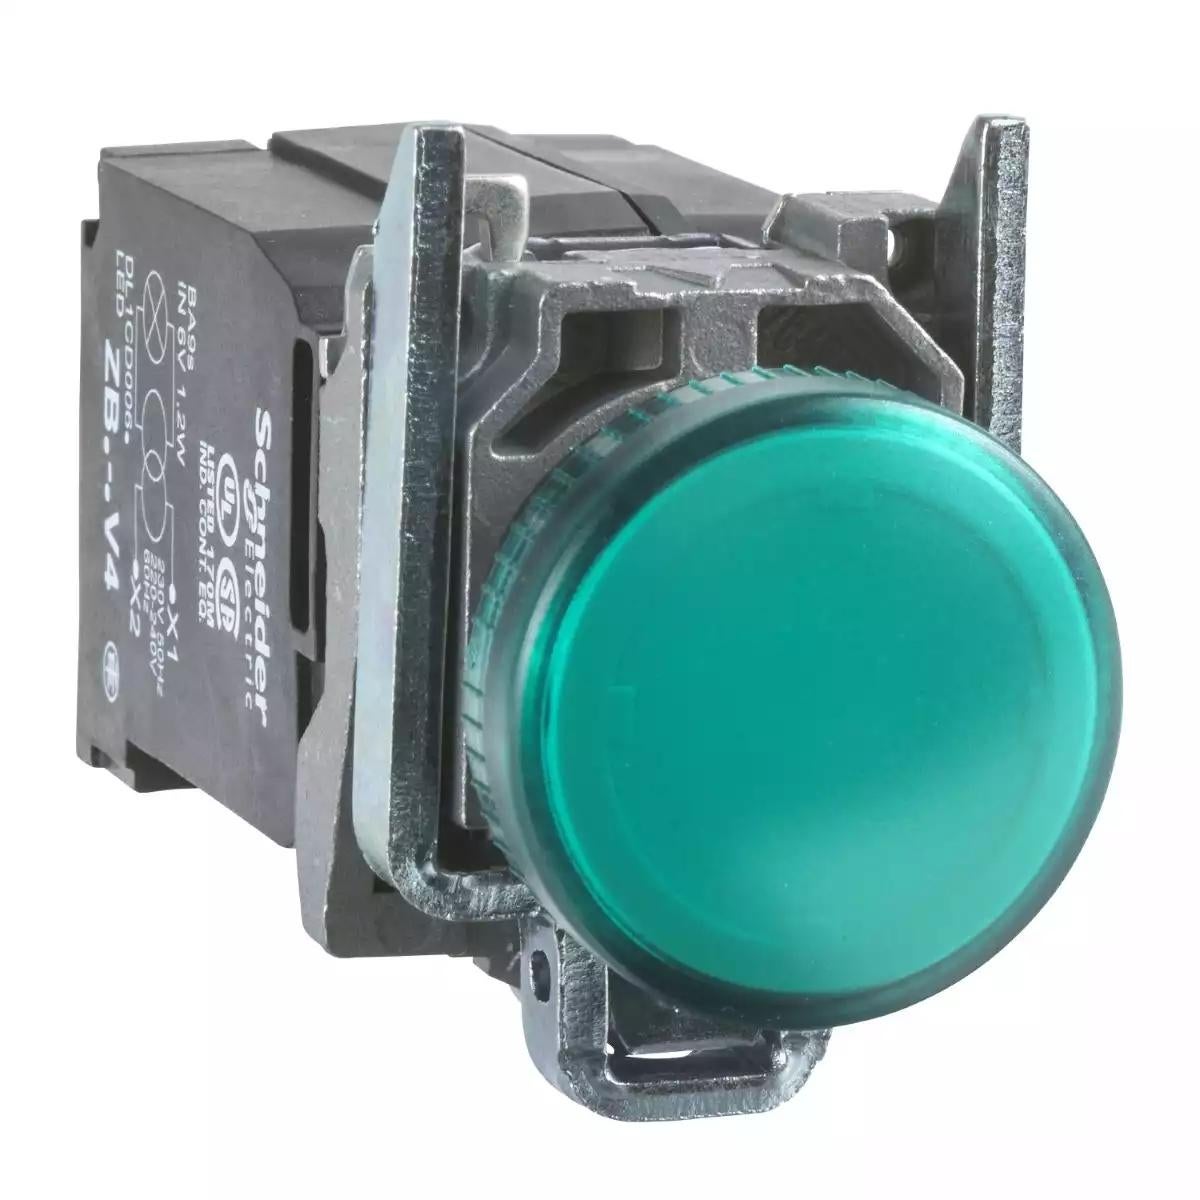 Pilot light, Harmony XB4, metal, green, 22mm, plain lens with BA9s bulb, 230…240V AC